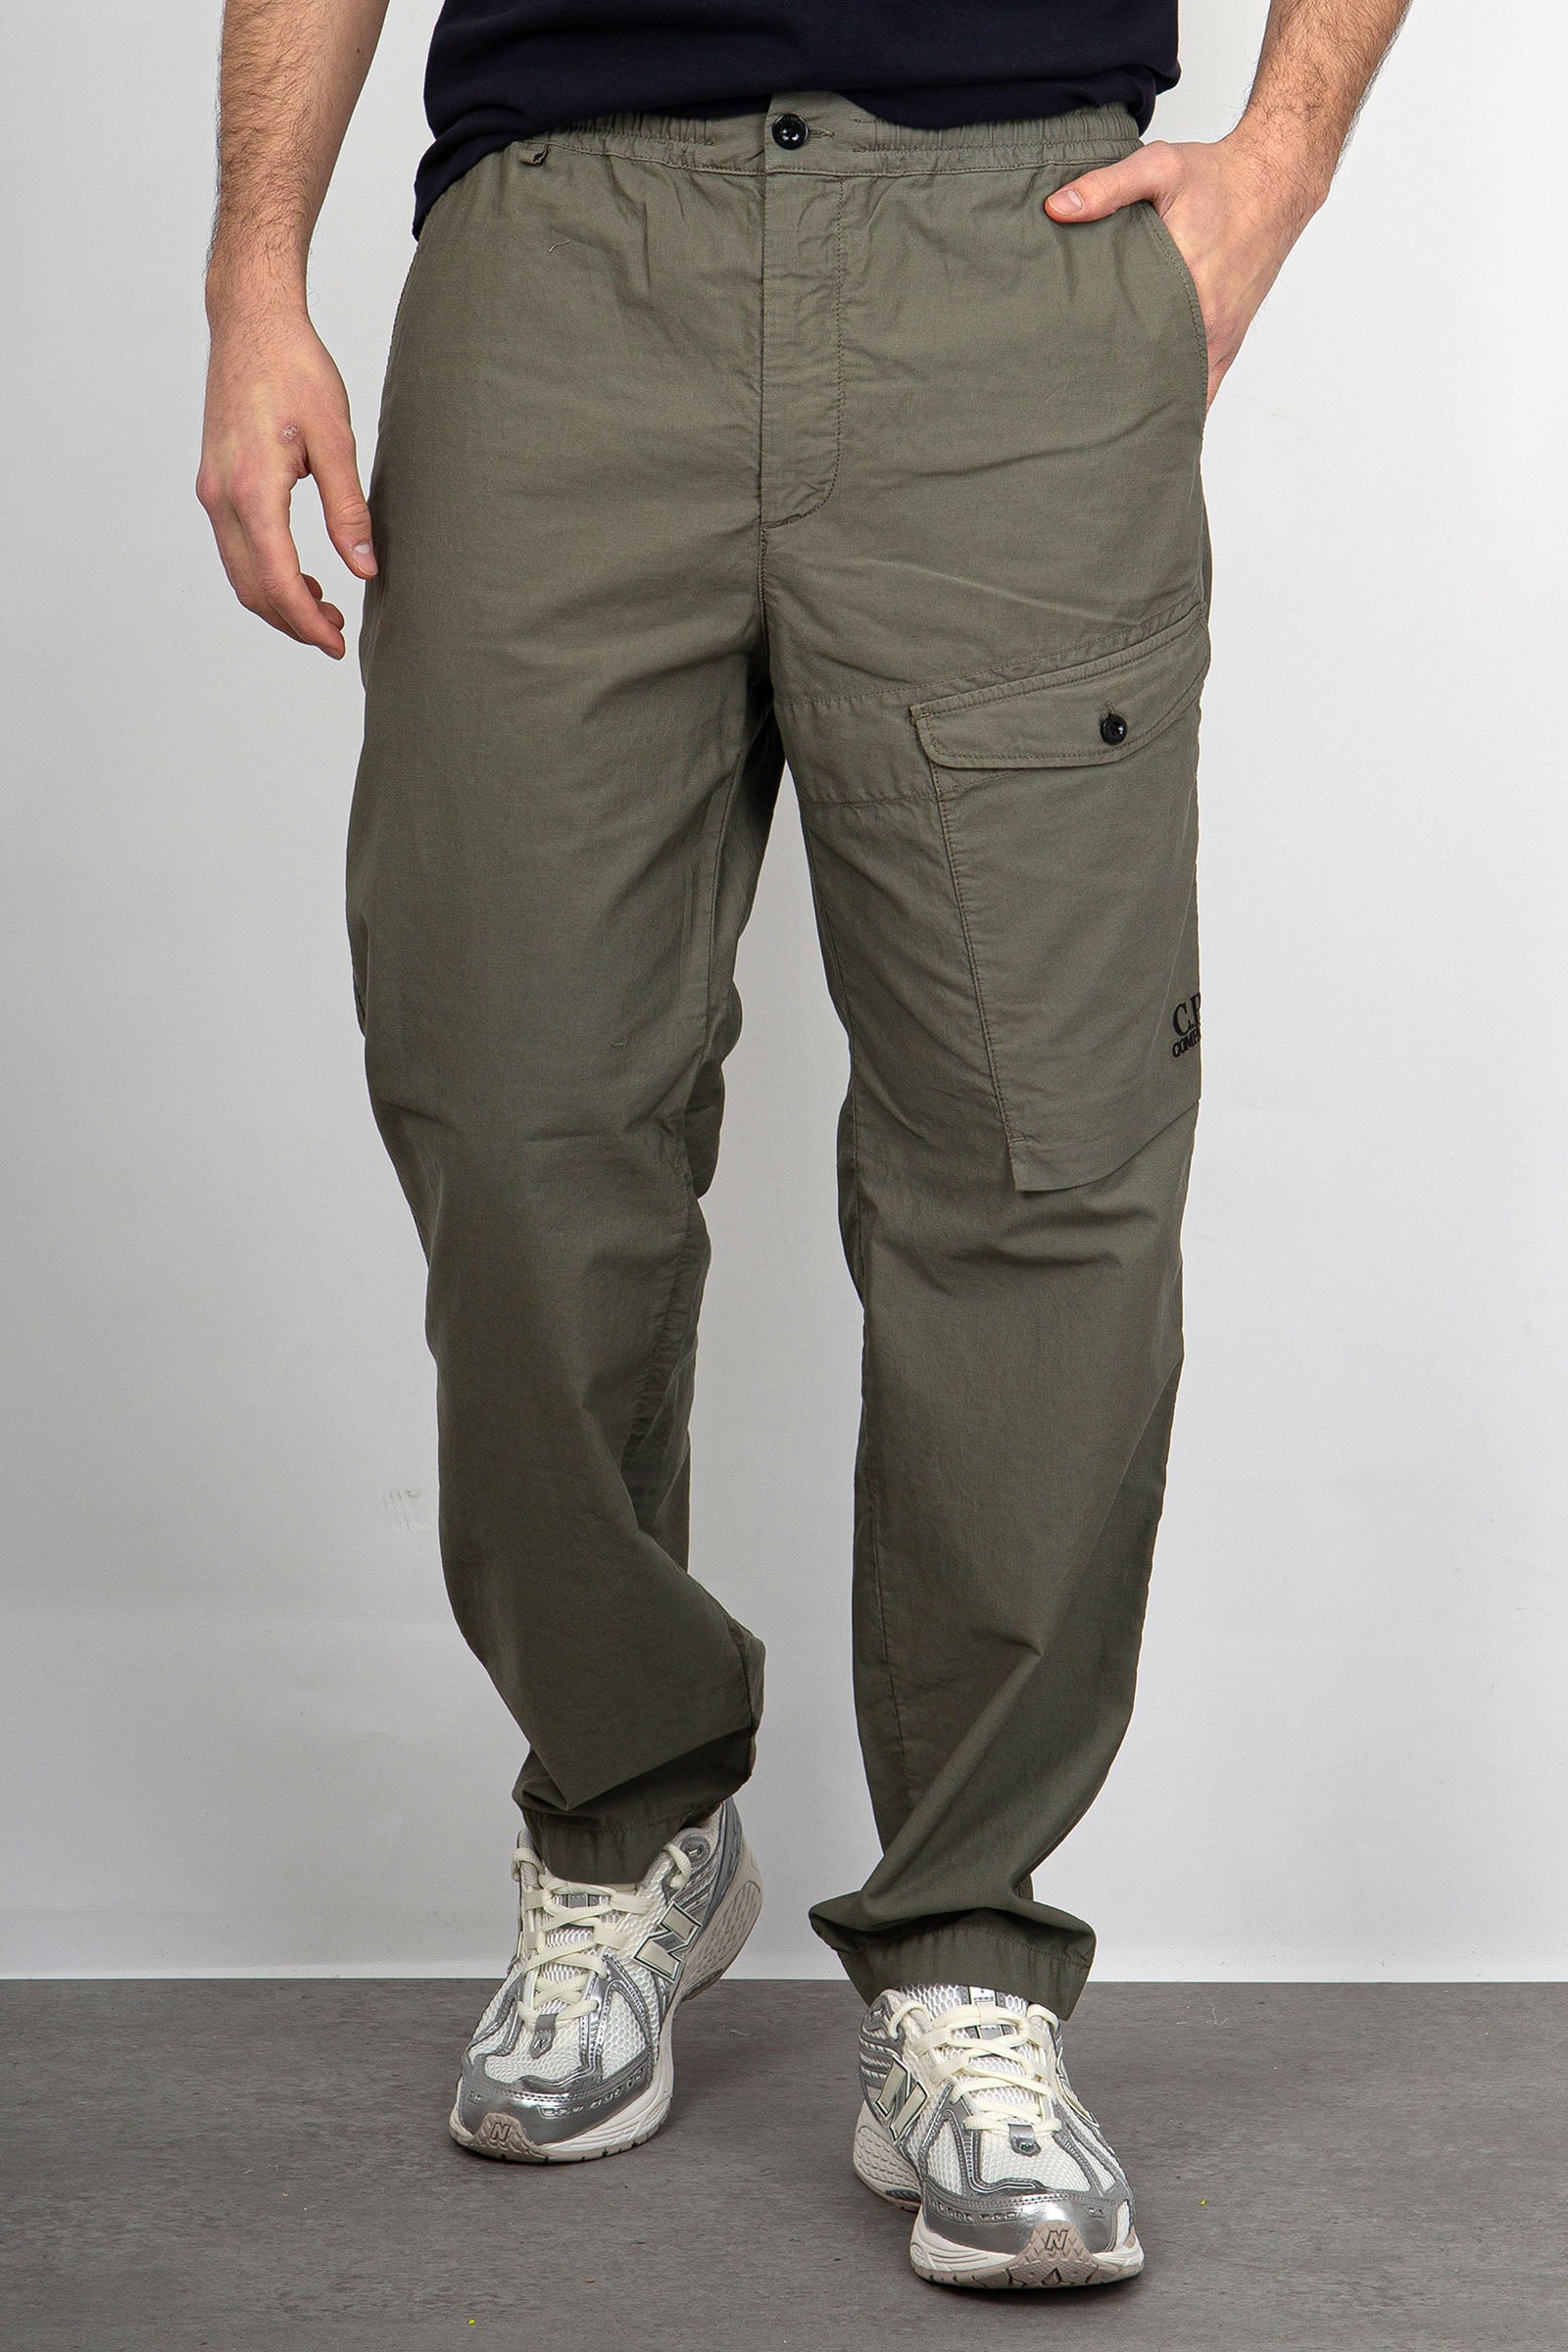 C.P. Company Green Military Cotton Cargo Pants - 4